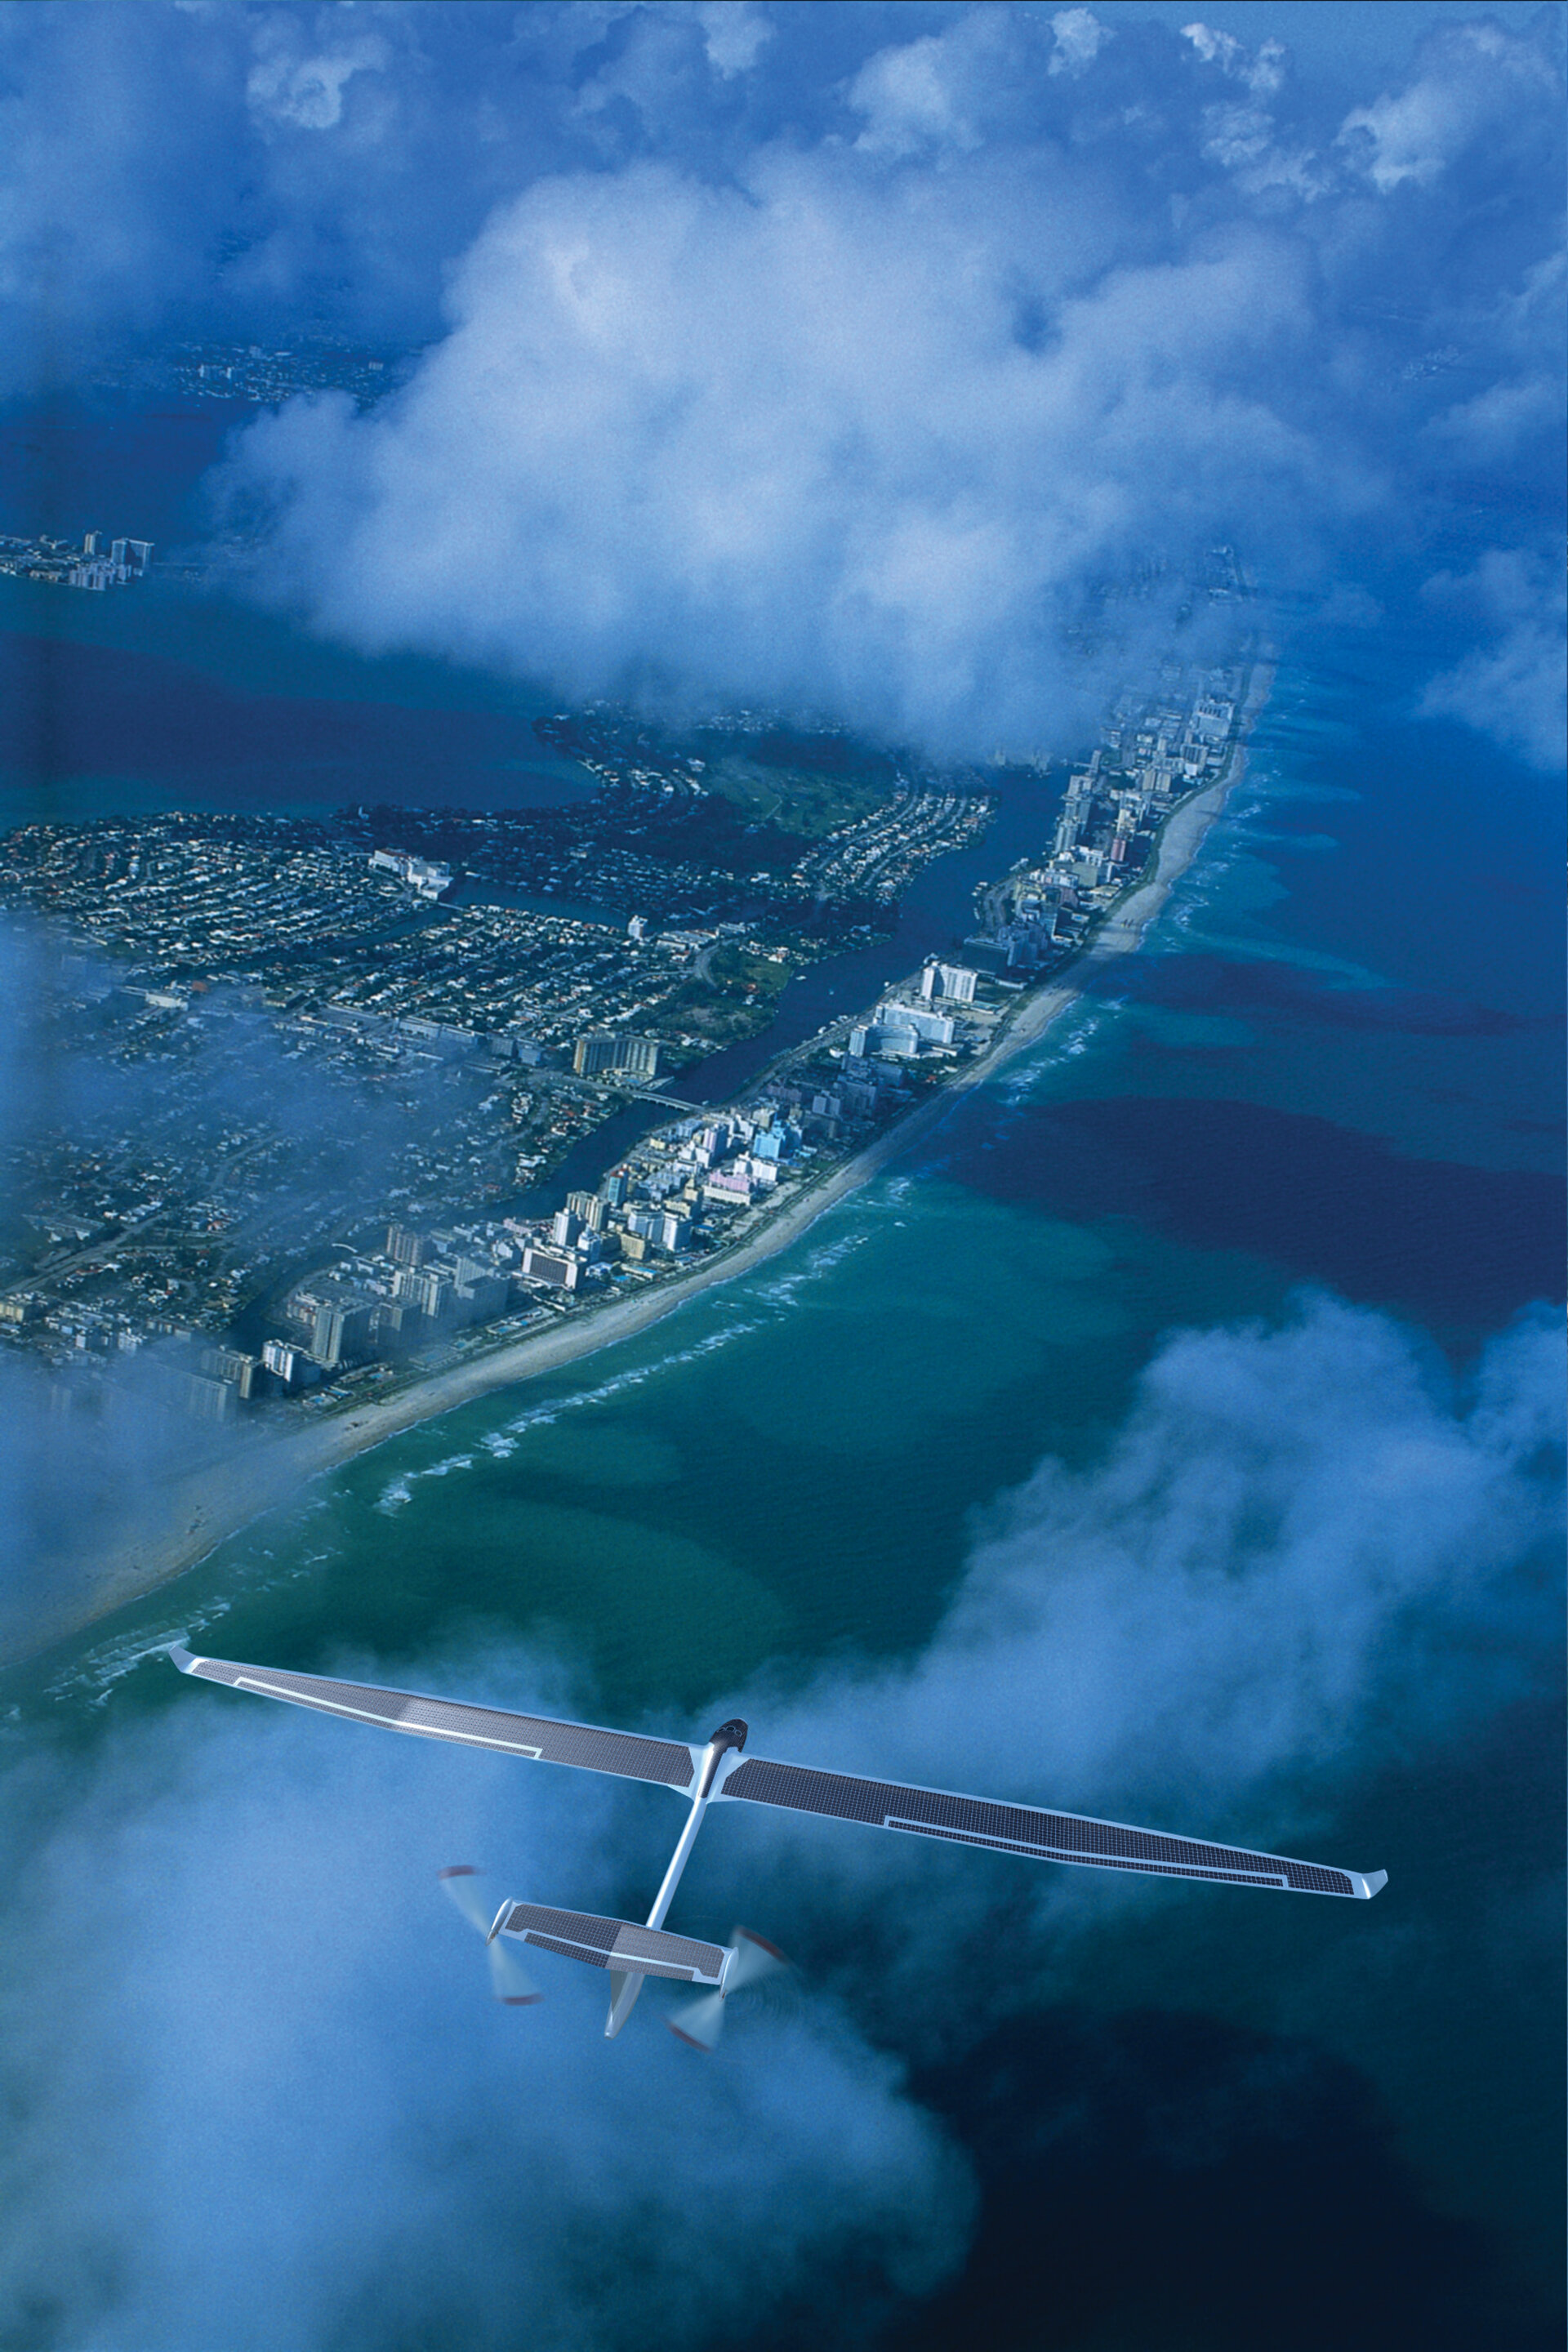 Solar Impulse aircraft